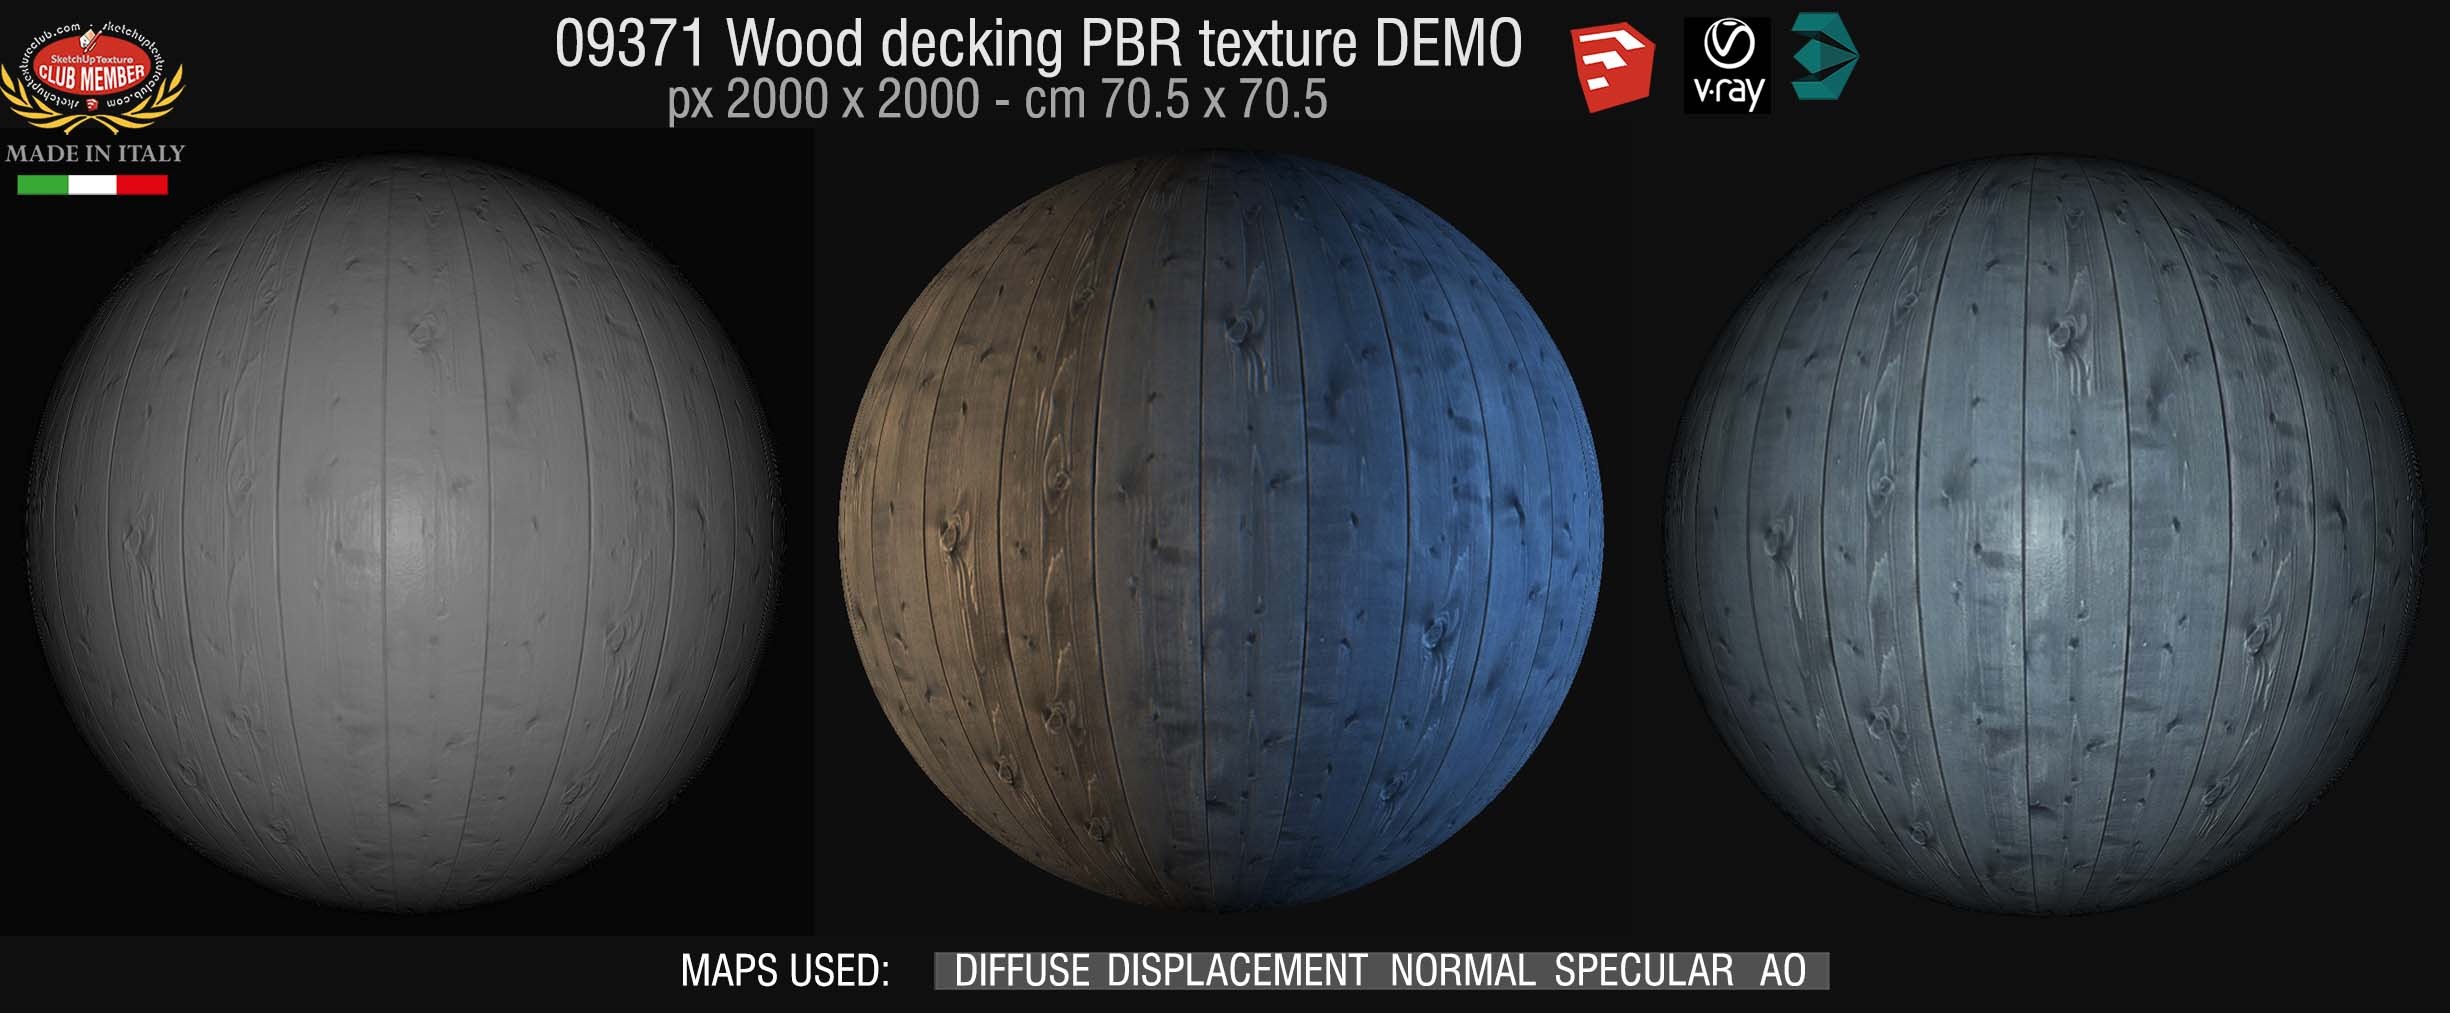 09371 Wood decking PBR texture seamless DEMO